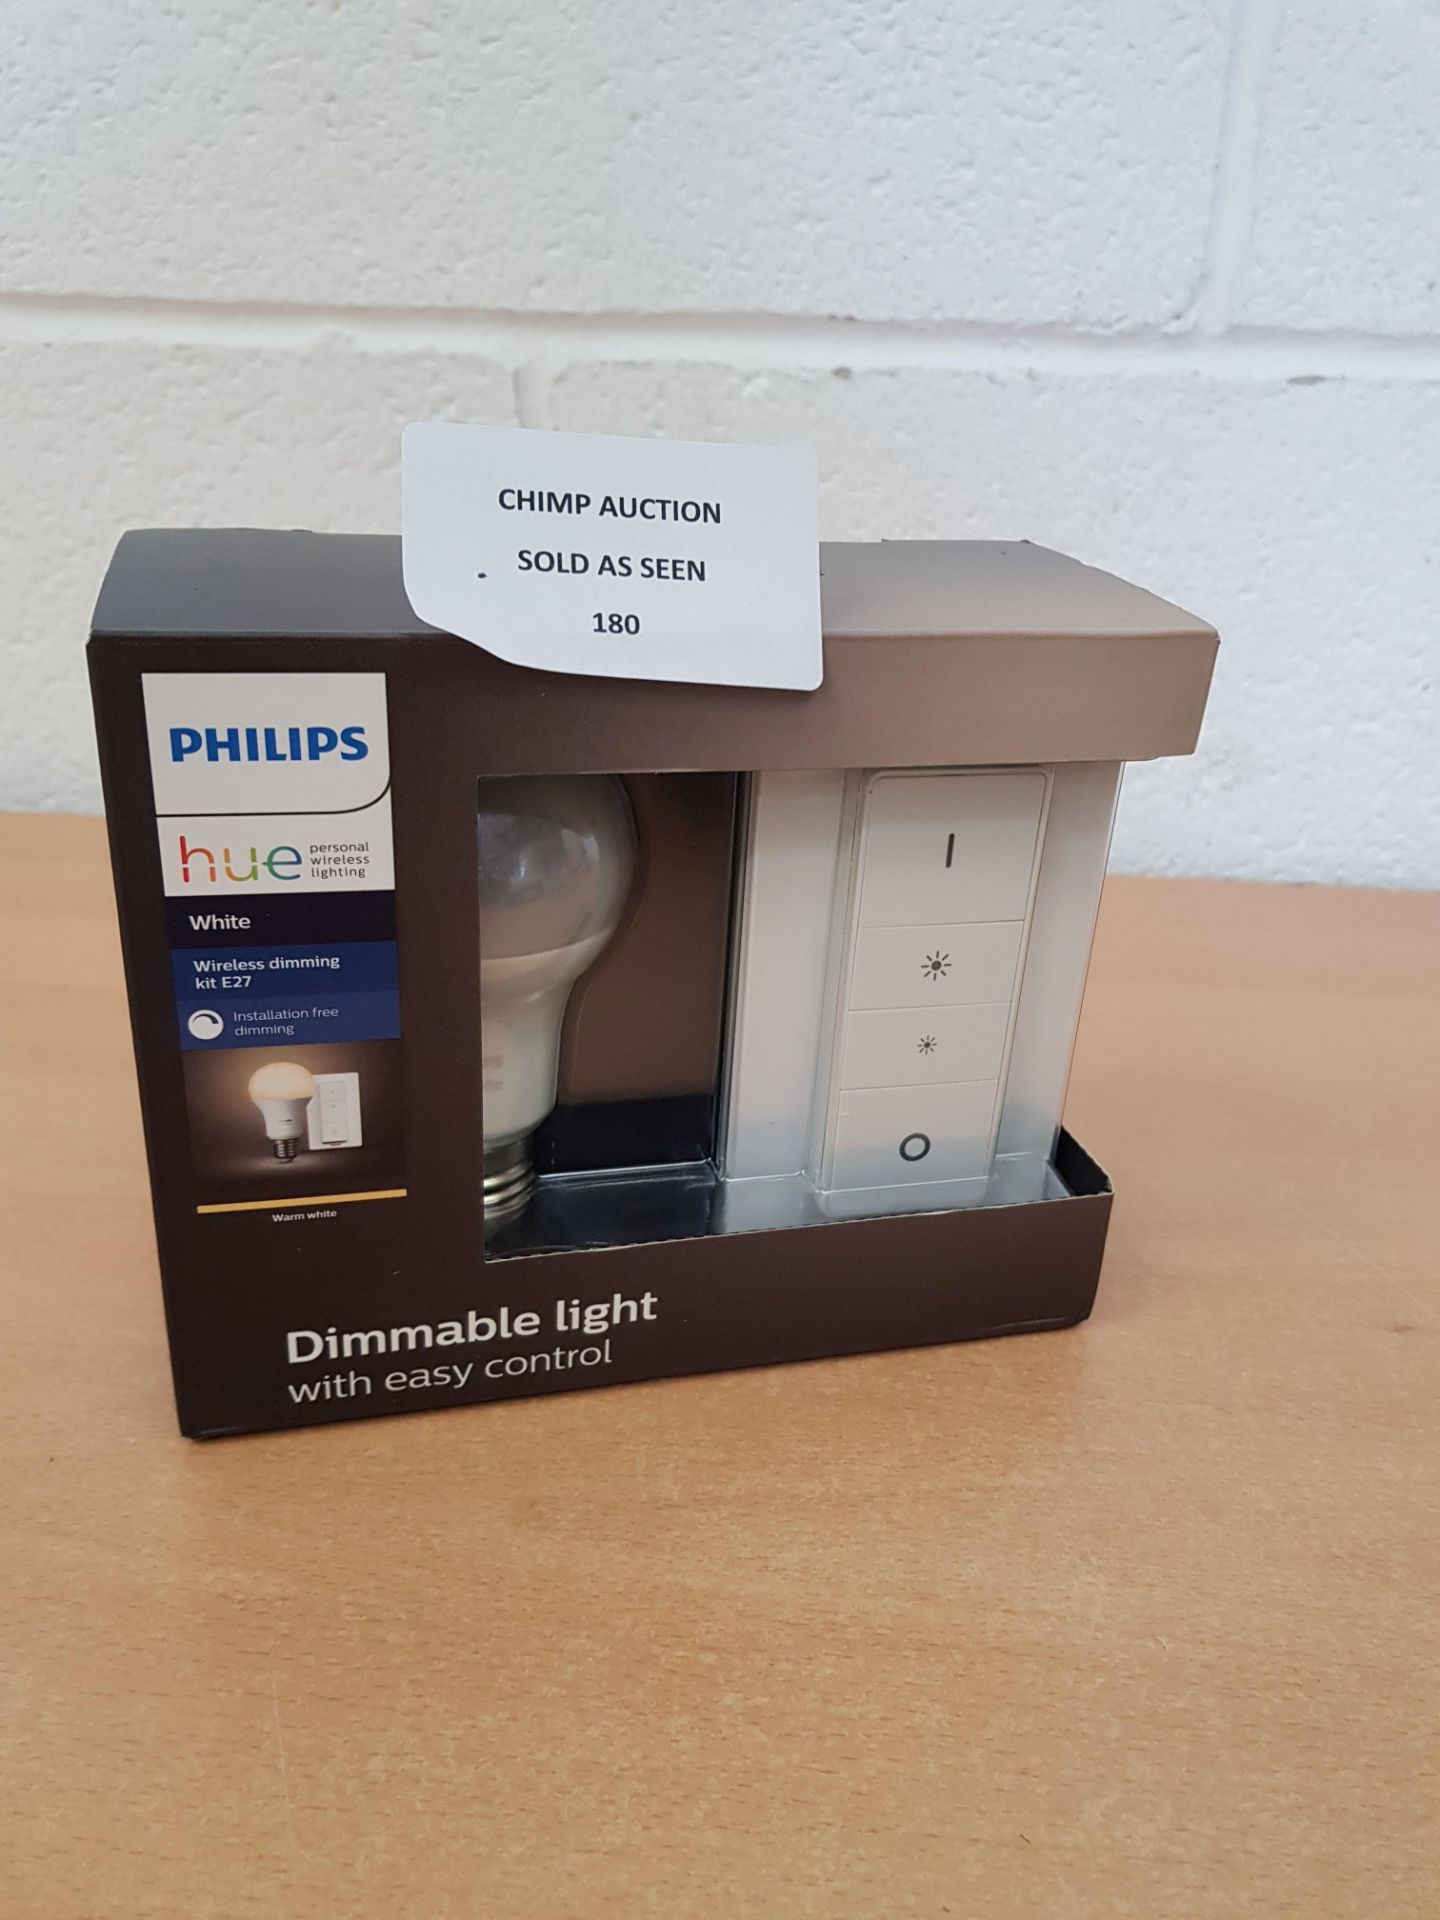 Philips Hue Smart Wireless Dimming Kit